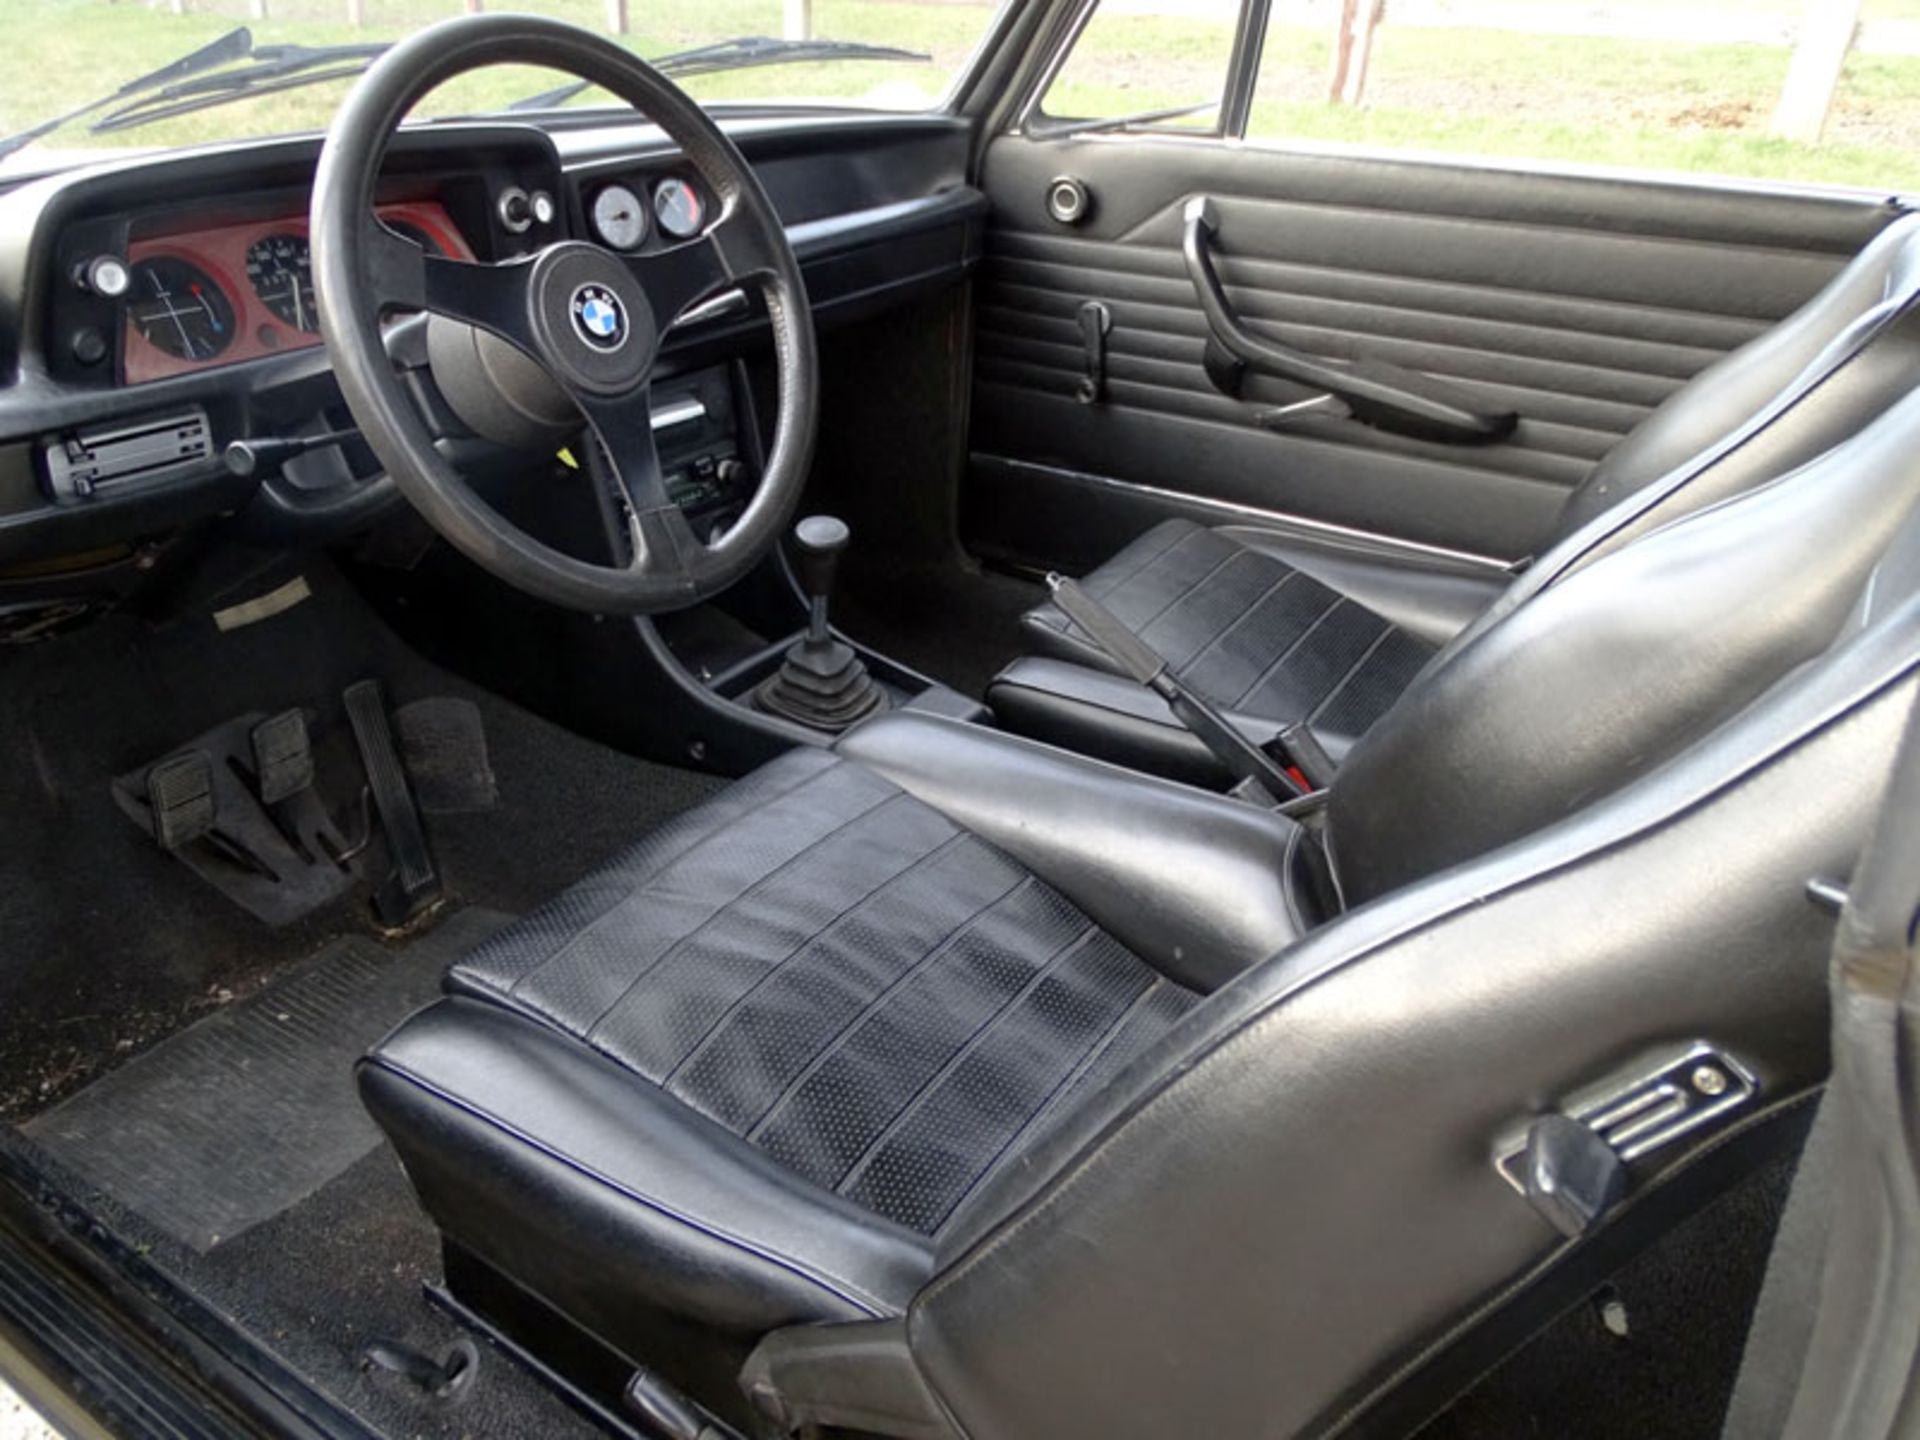 1975 BMW 2002 Turbo - Image 5 of 11